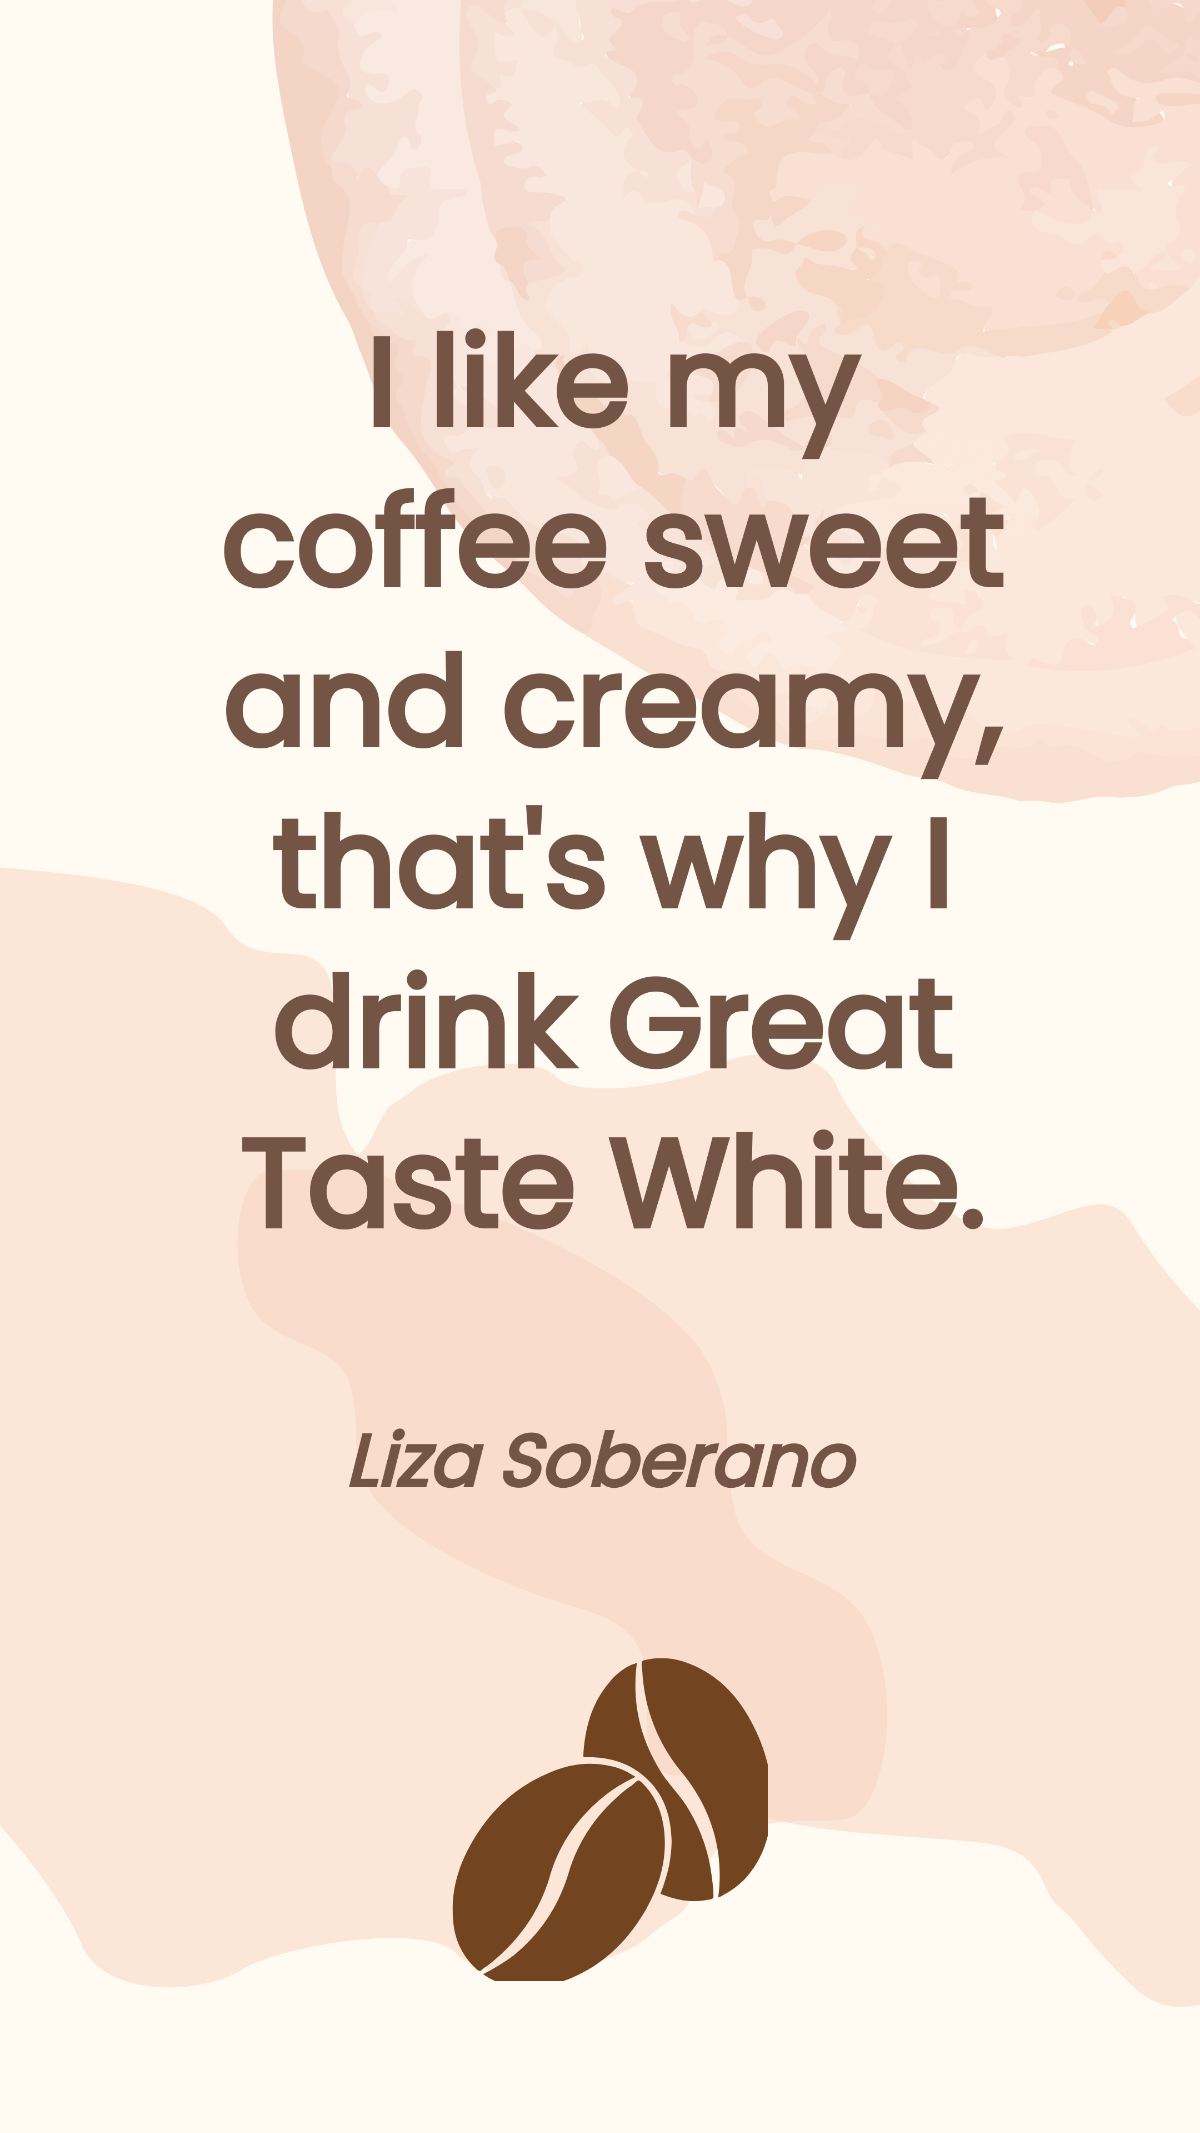 Free Liza Soberano - I like my coffee sweet and creamy, that's why I drink Great Taste White. Template